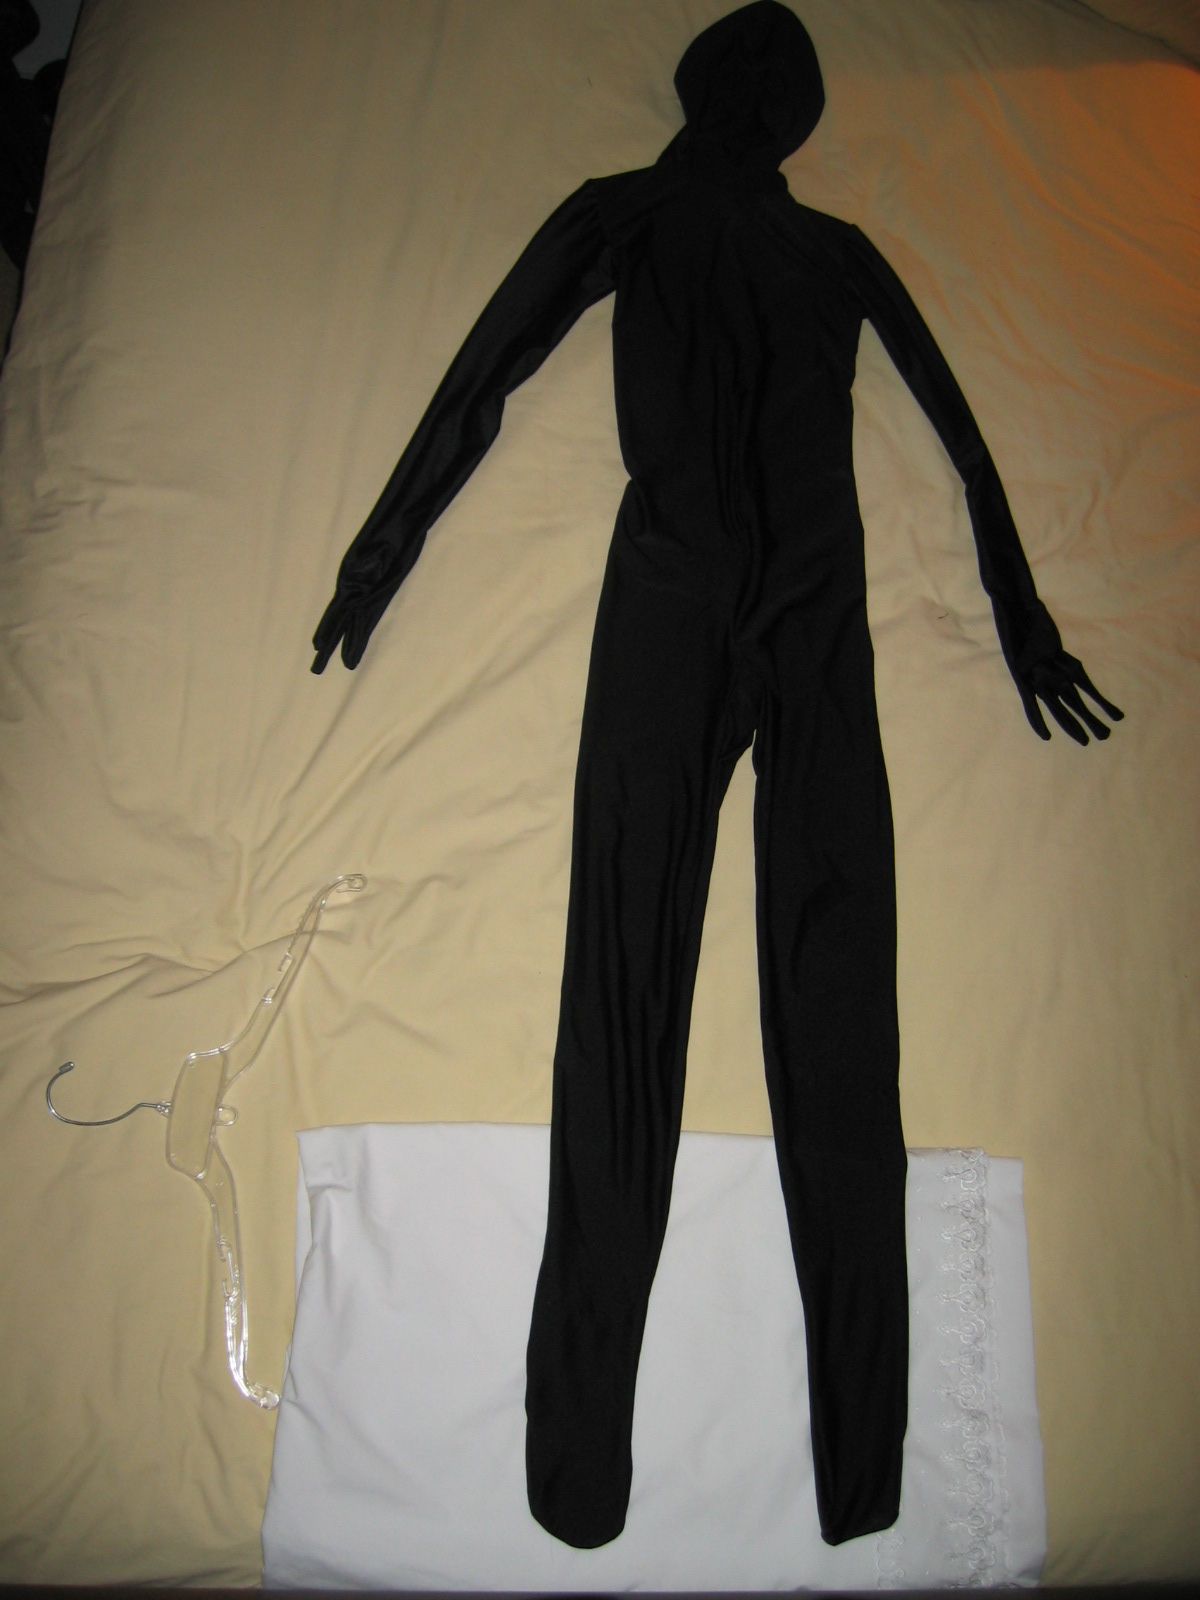 File:Unworn Black Zentai Suit.jpg - Wikimedia Commons